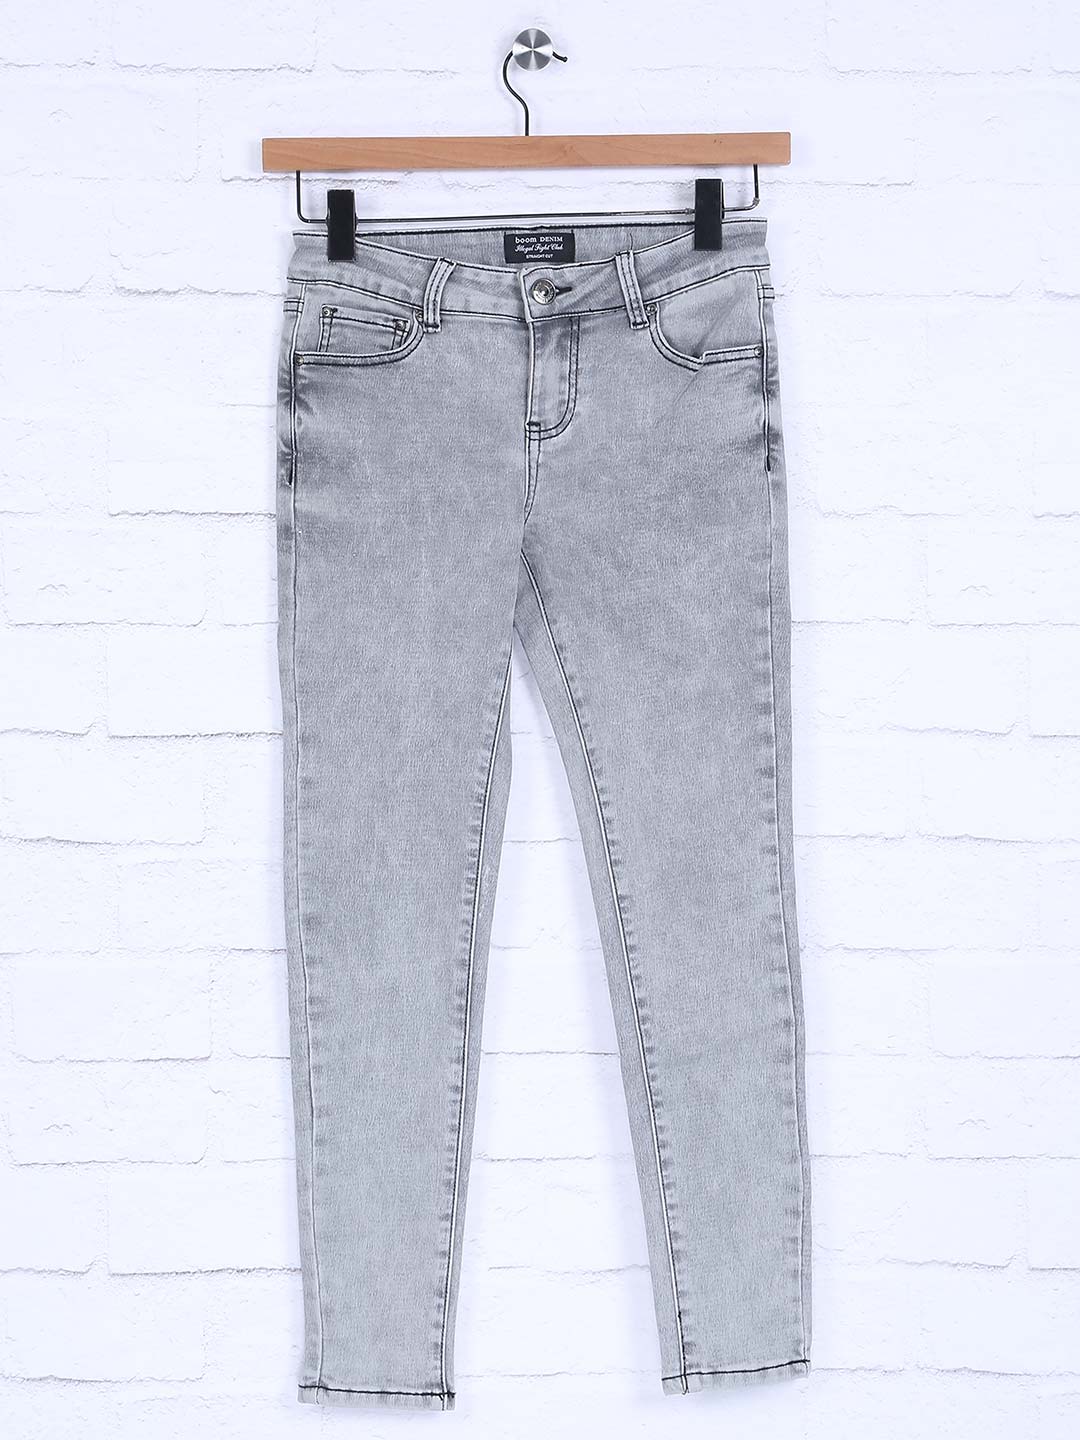 grey color jeans